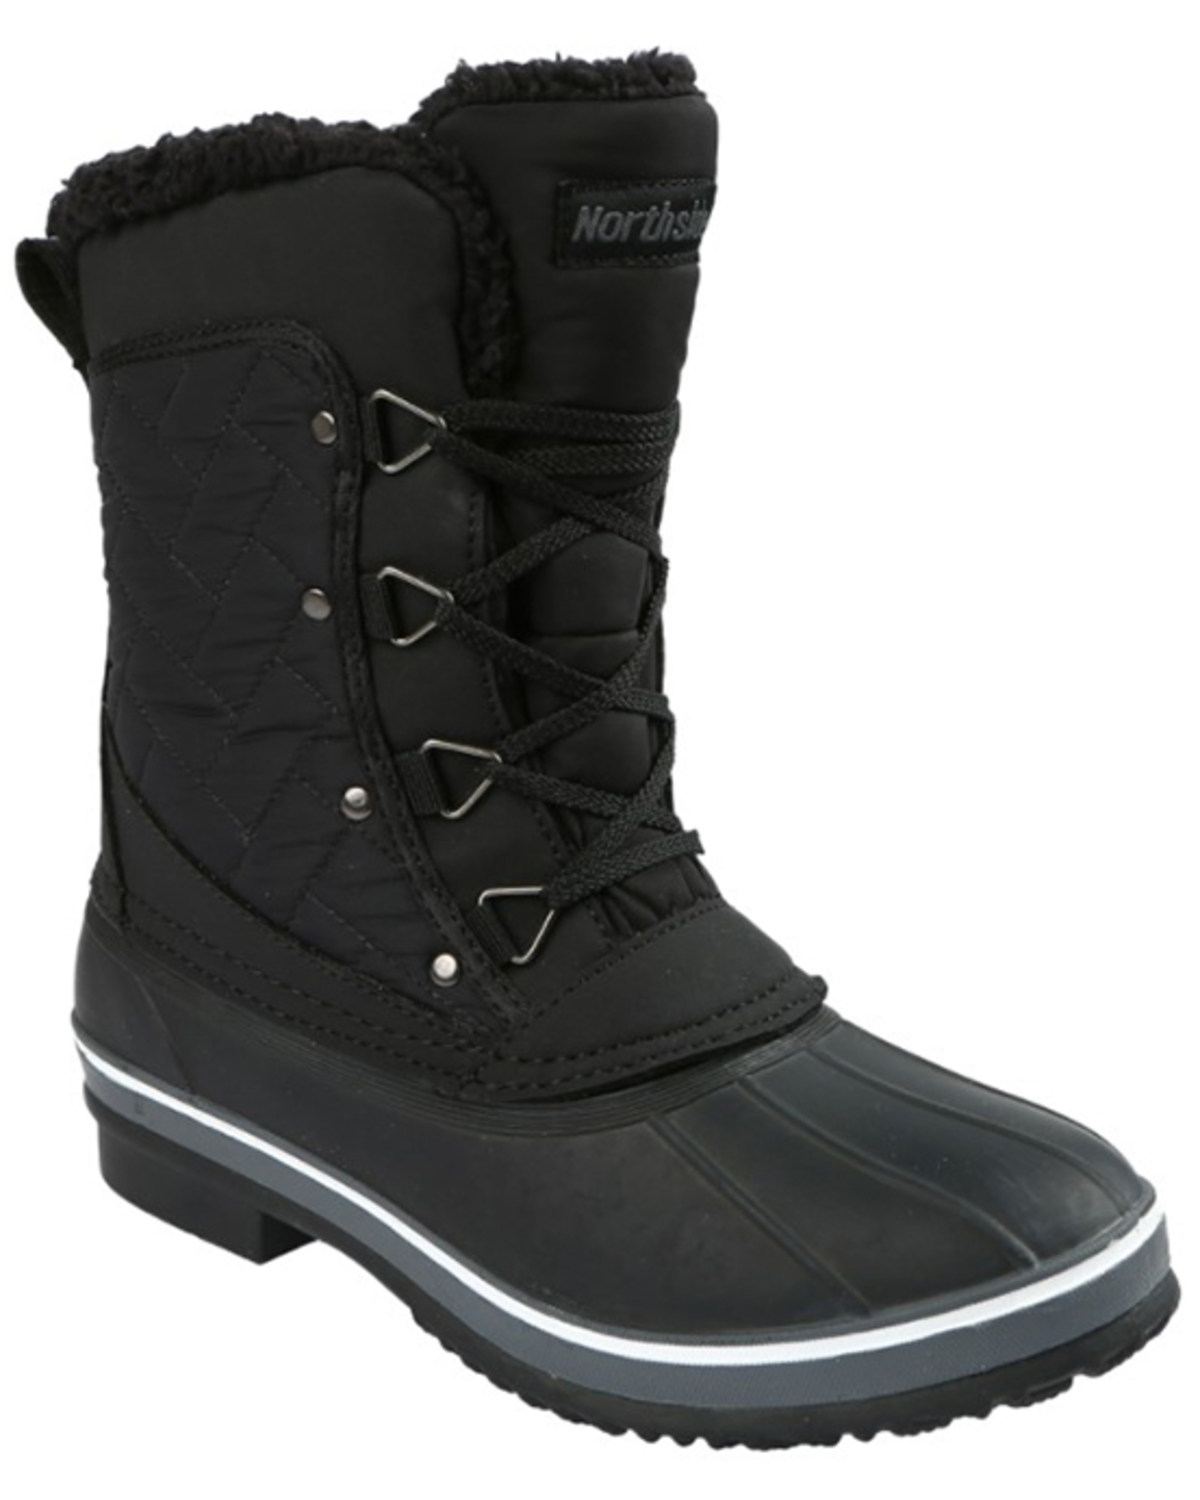 Northside Women's Modesto Waterproof Winter Snow Boots - Soft Toe